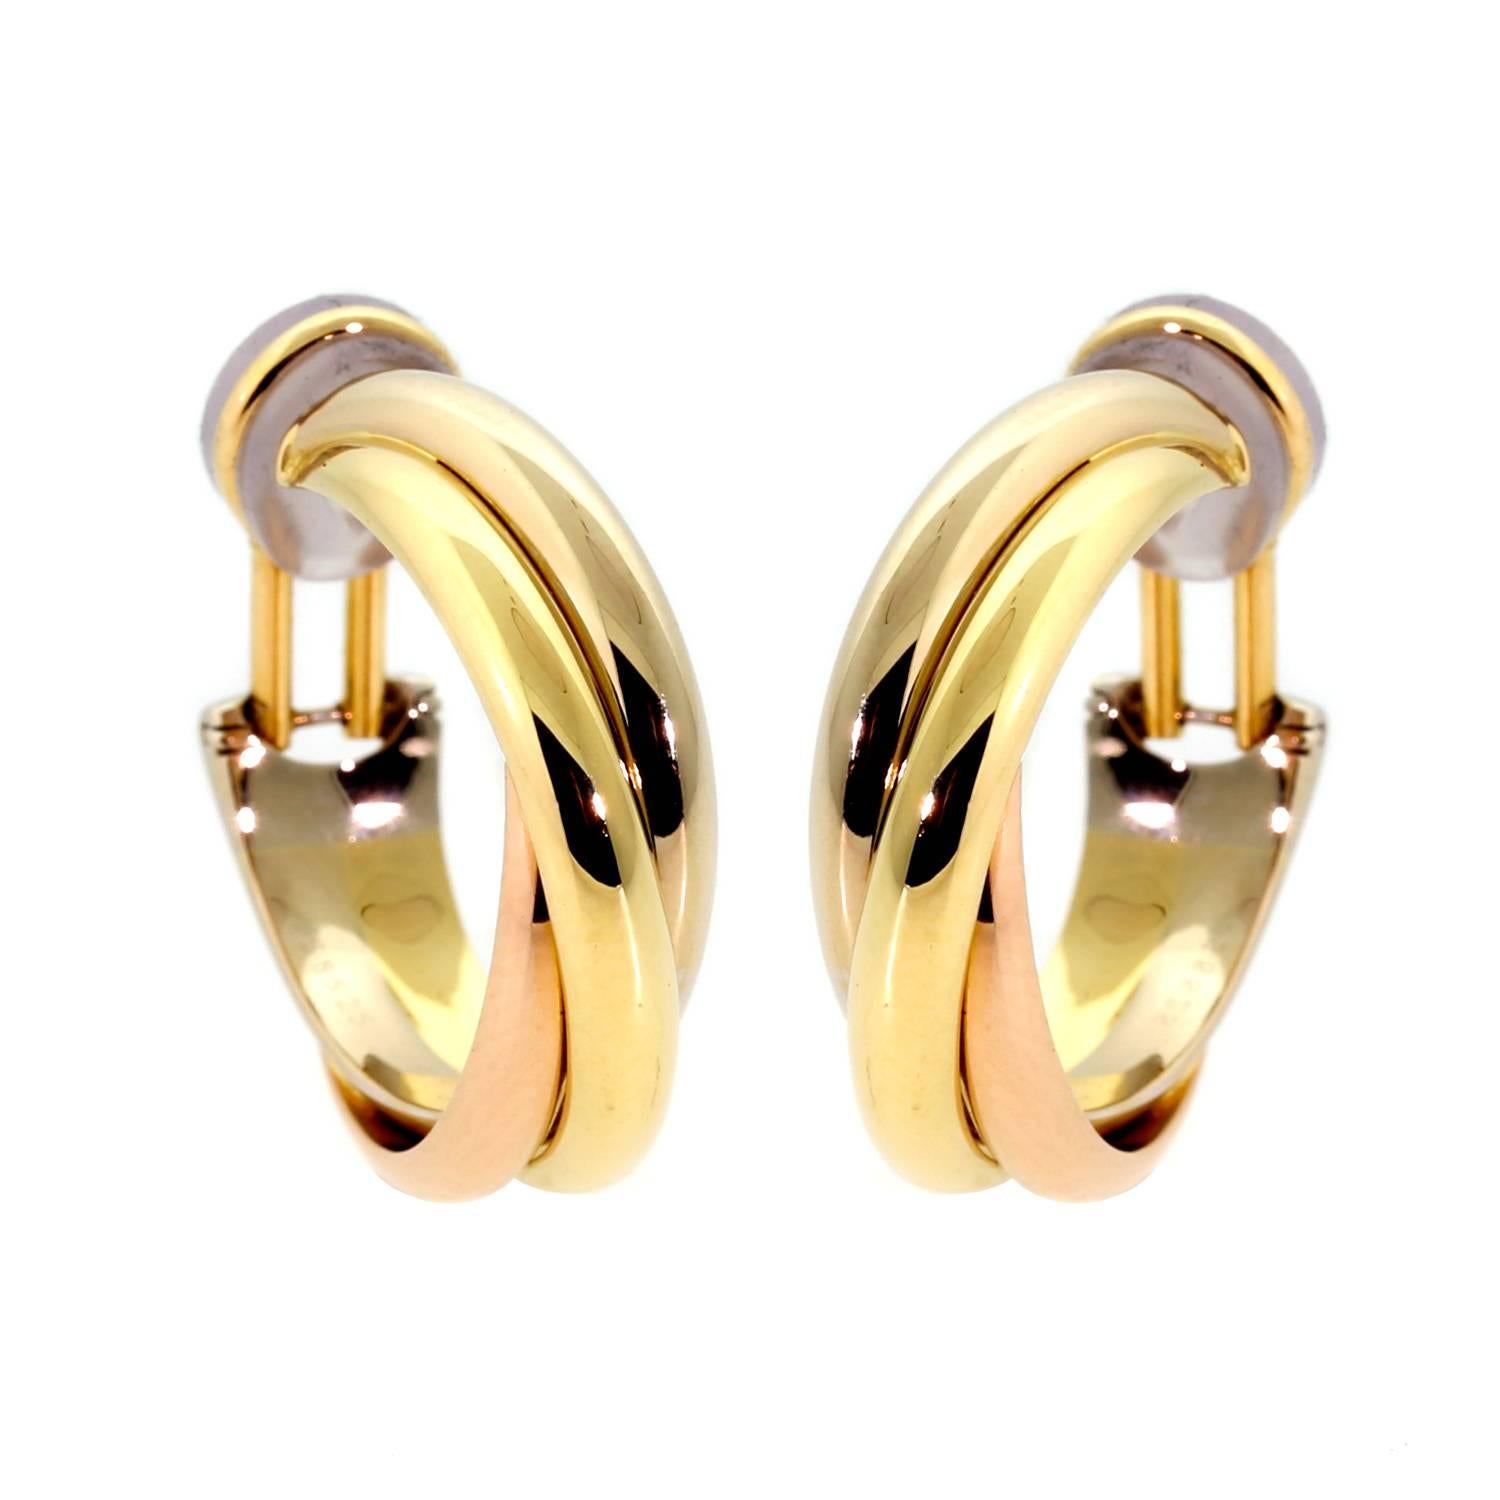 Cartier Trinity Medium Hoop Gold Earrings